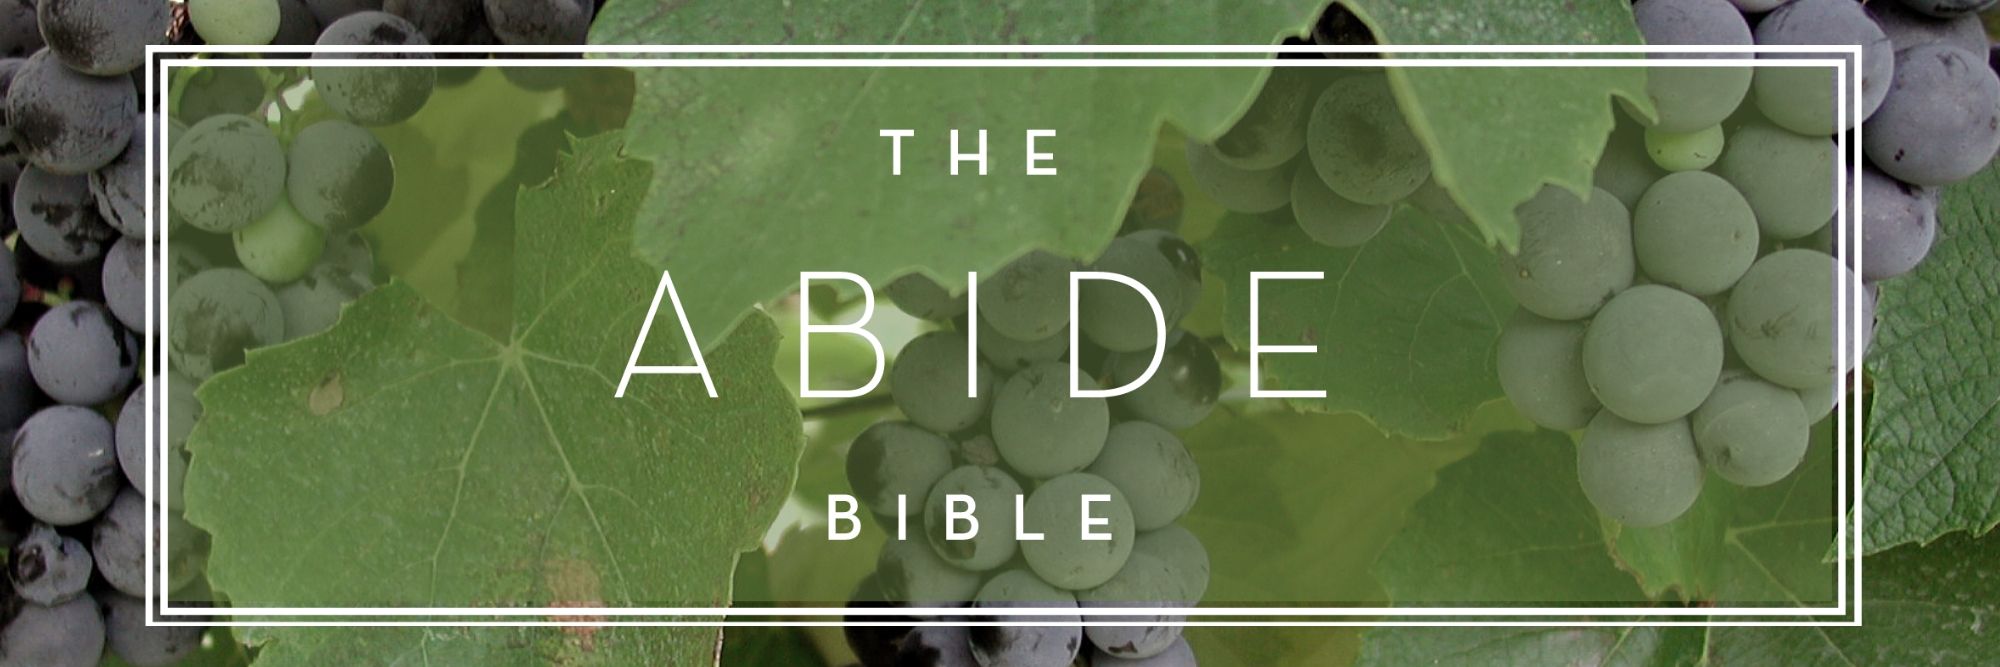 Abide-Bible